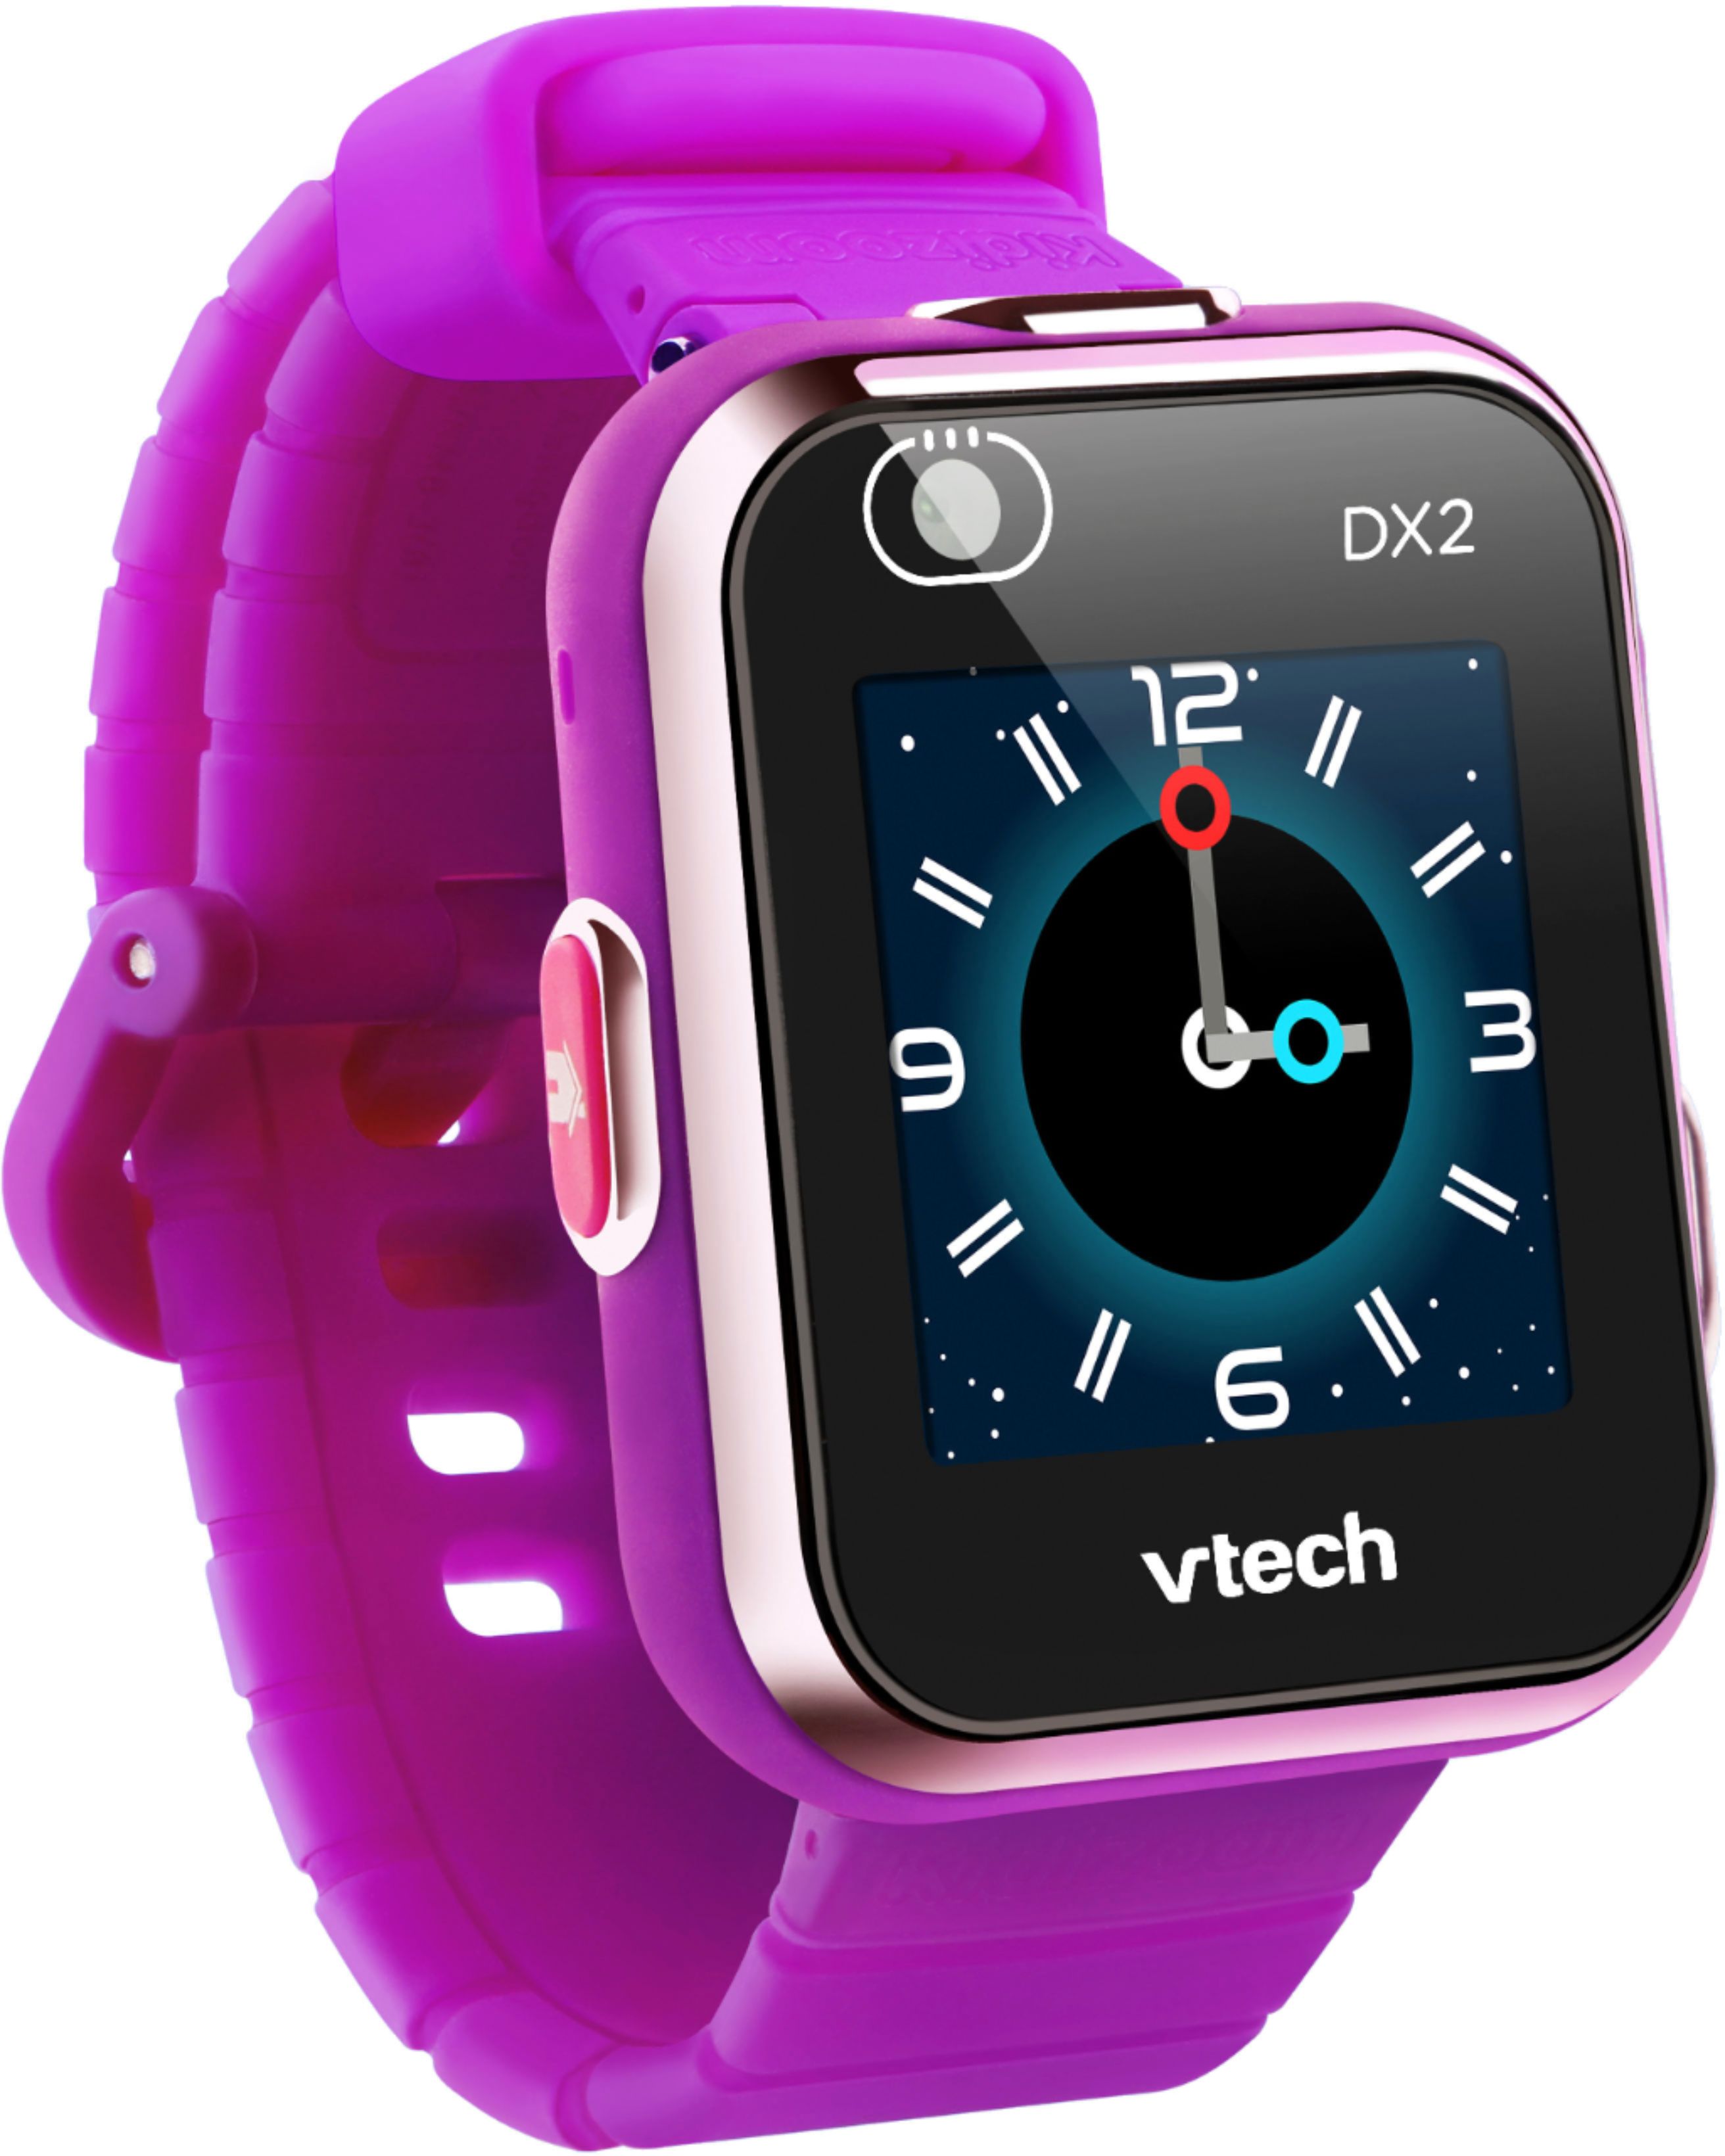 VTech Kidizoom DX2 Smartwatch Purple 80 